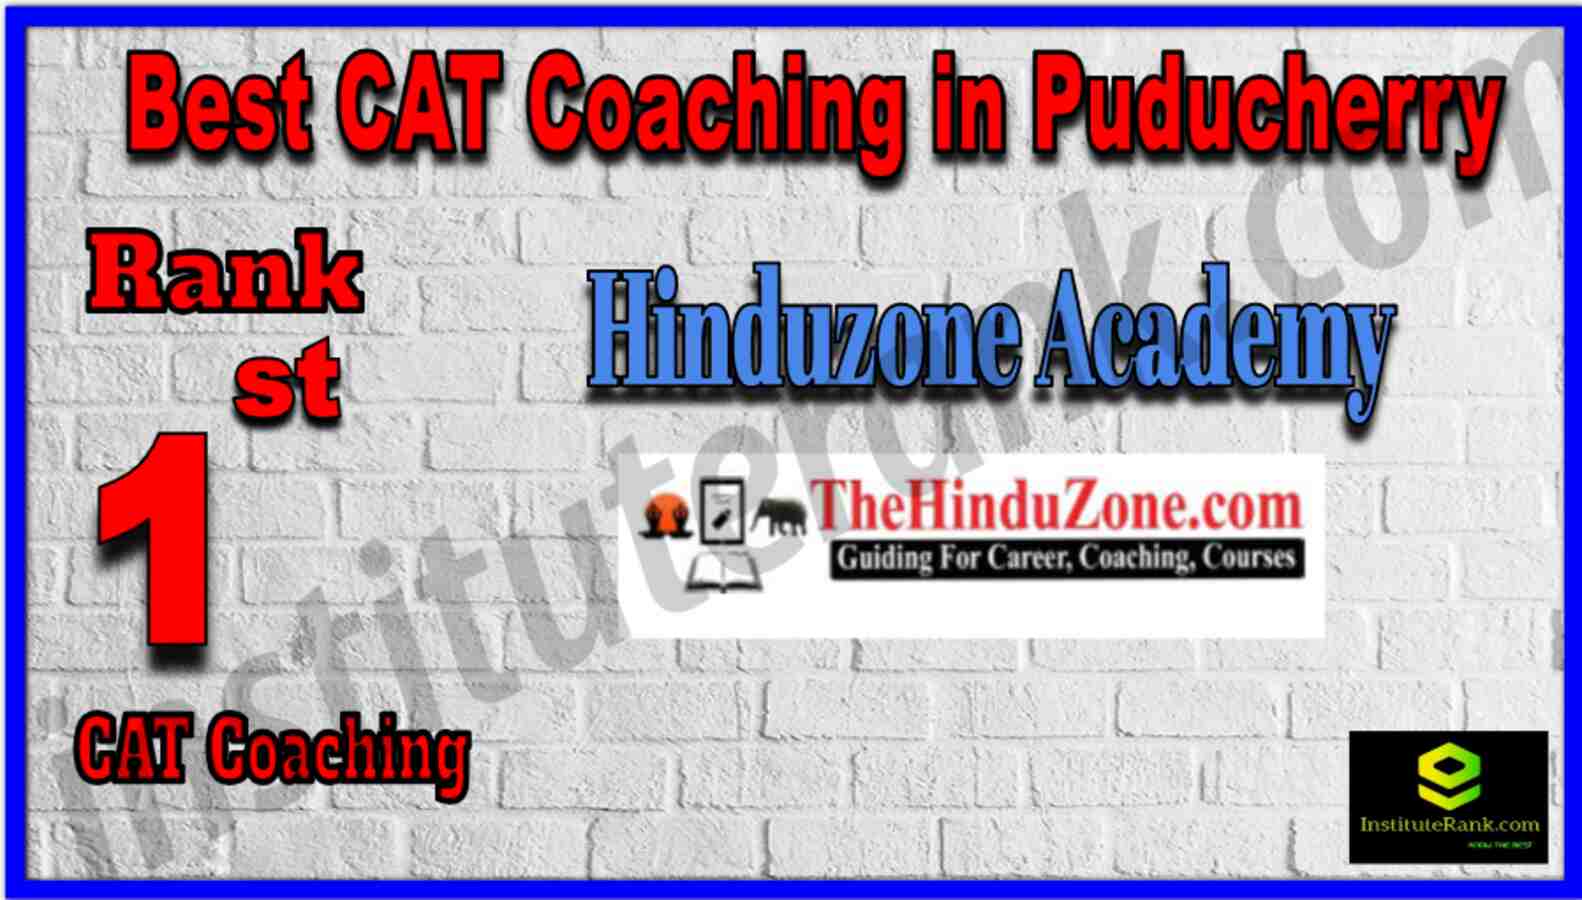 Rank 1 Best CAT Coaching in Puducherry